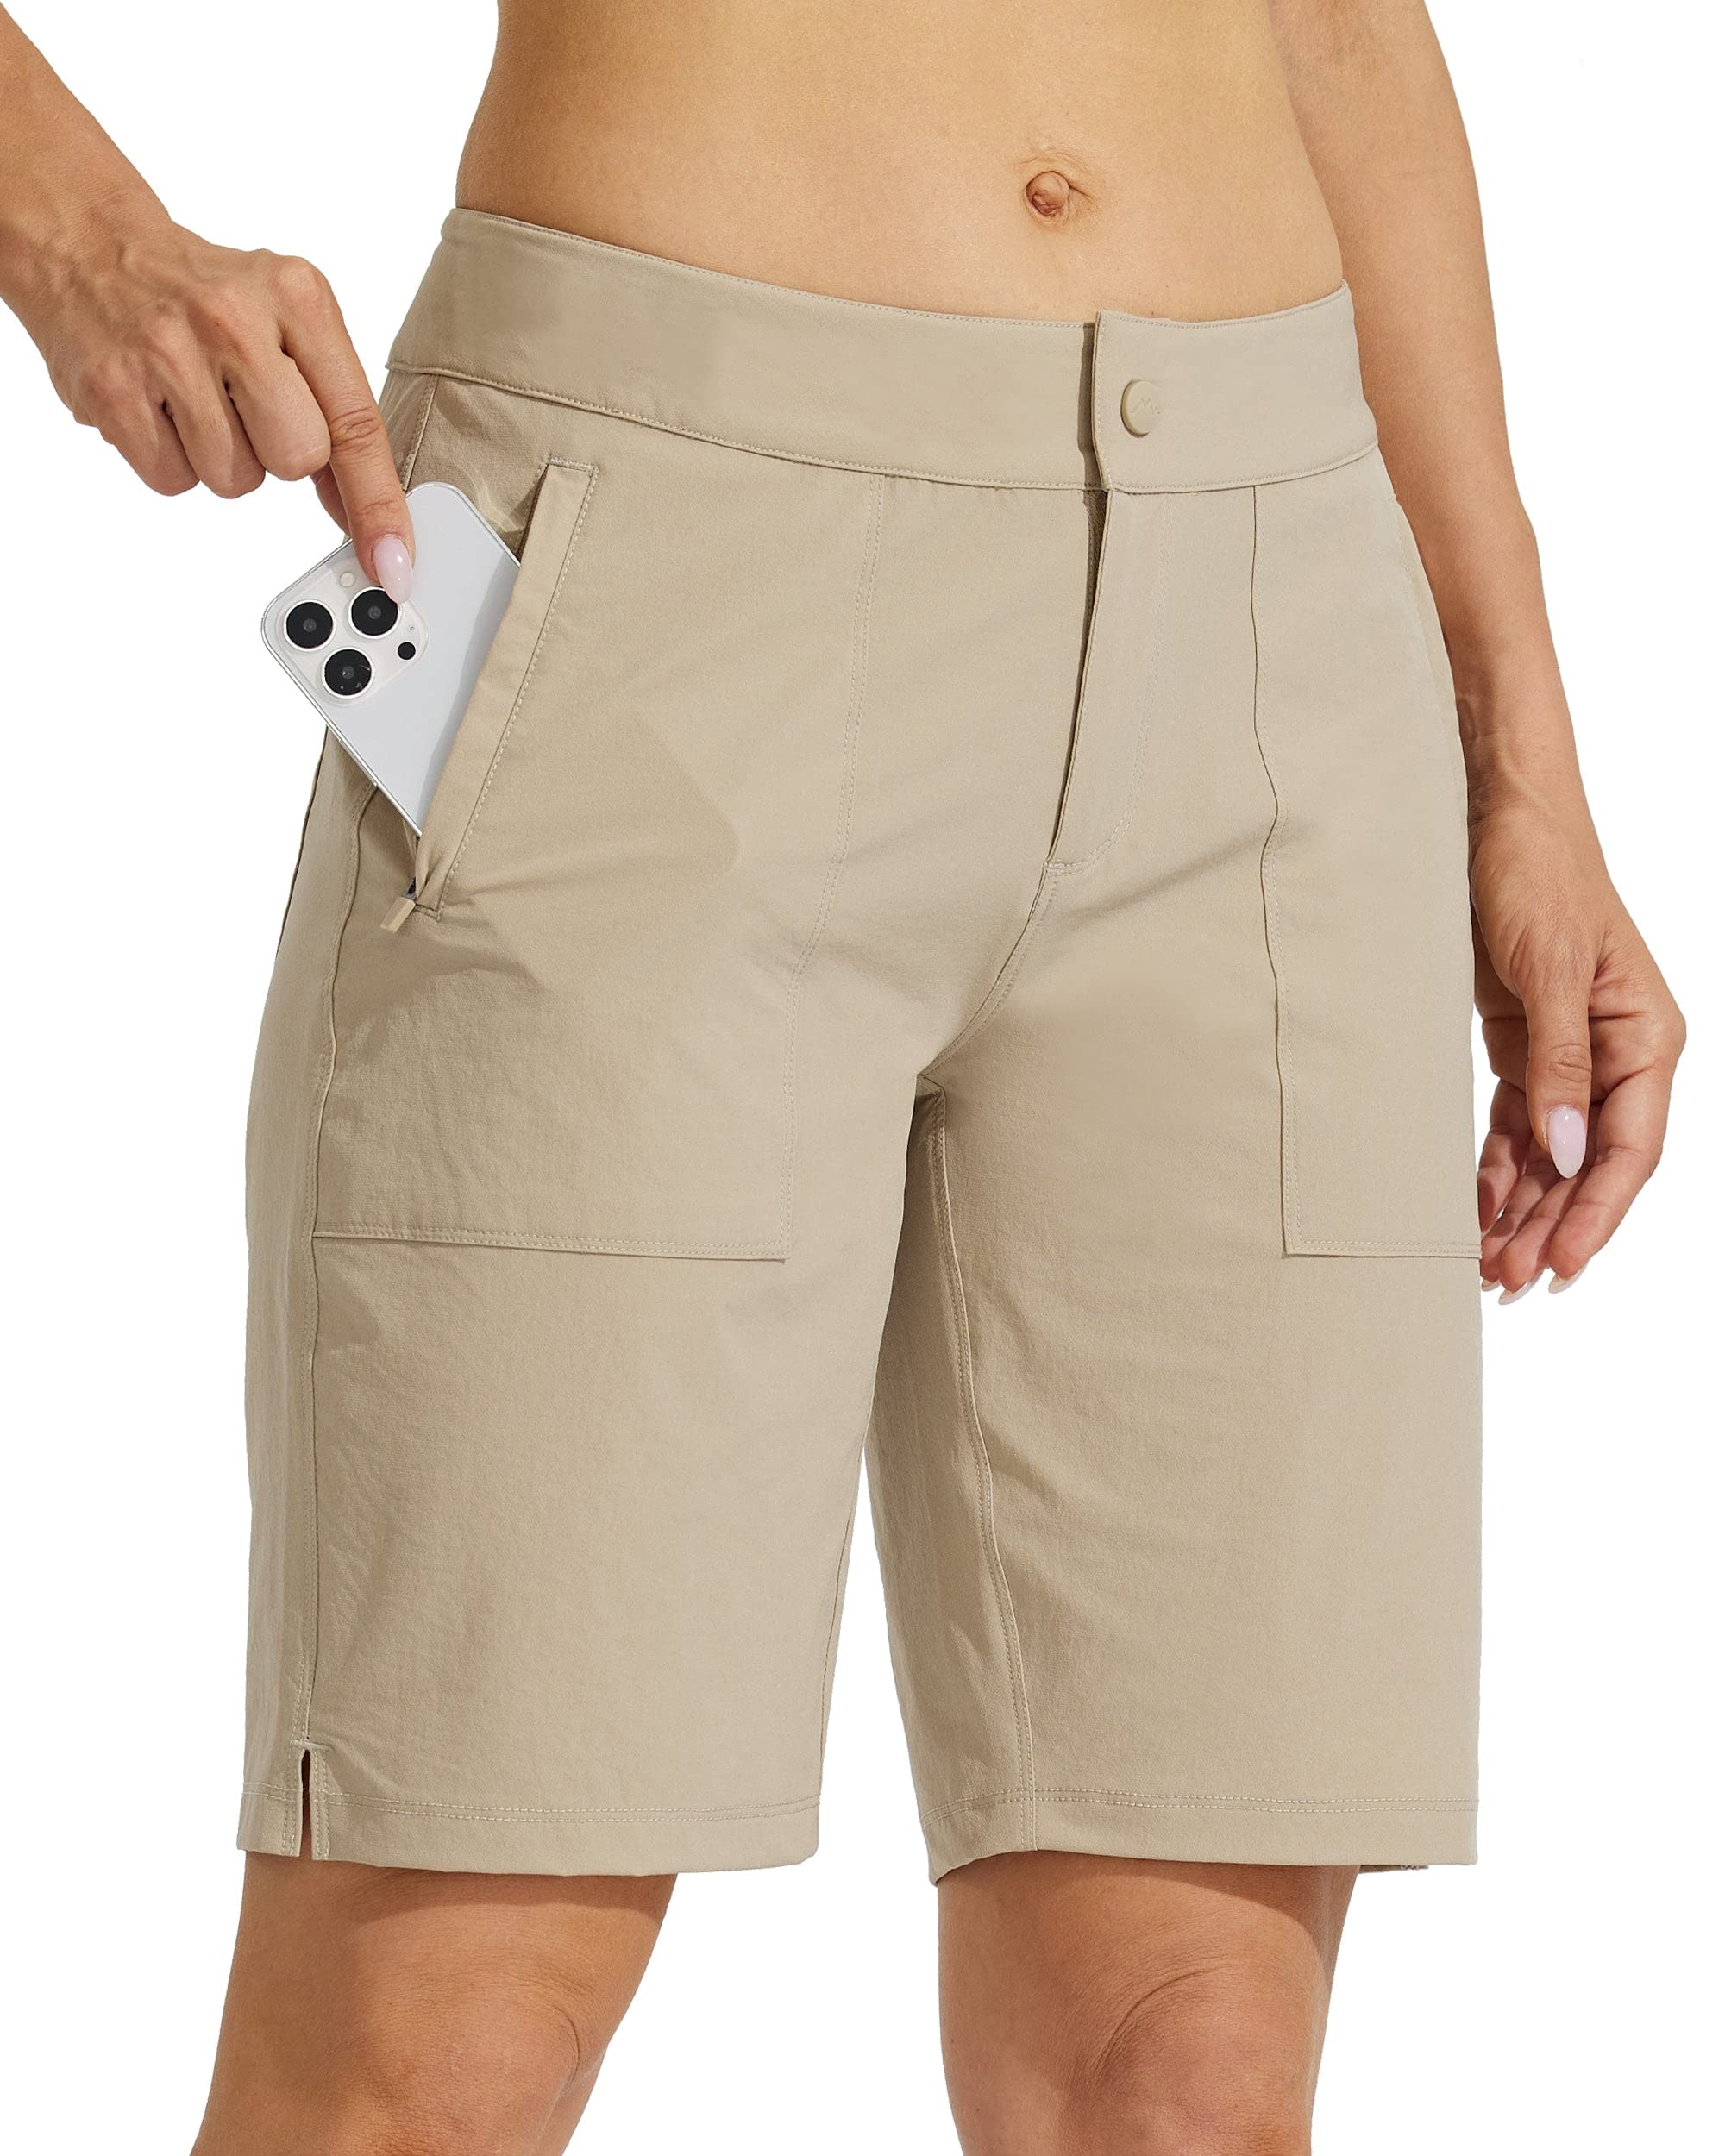 Willit Women's Golf Hiking Shorts